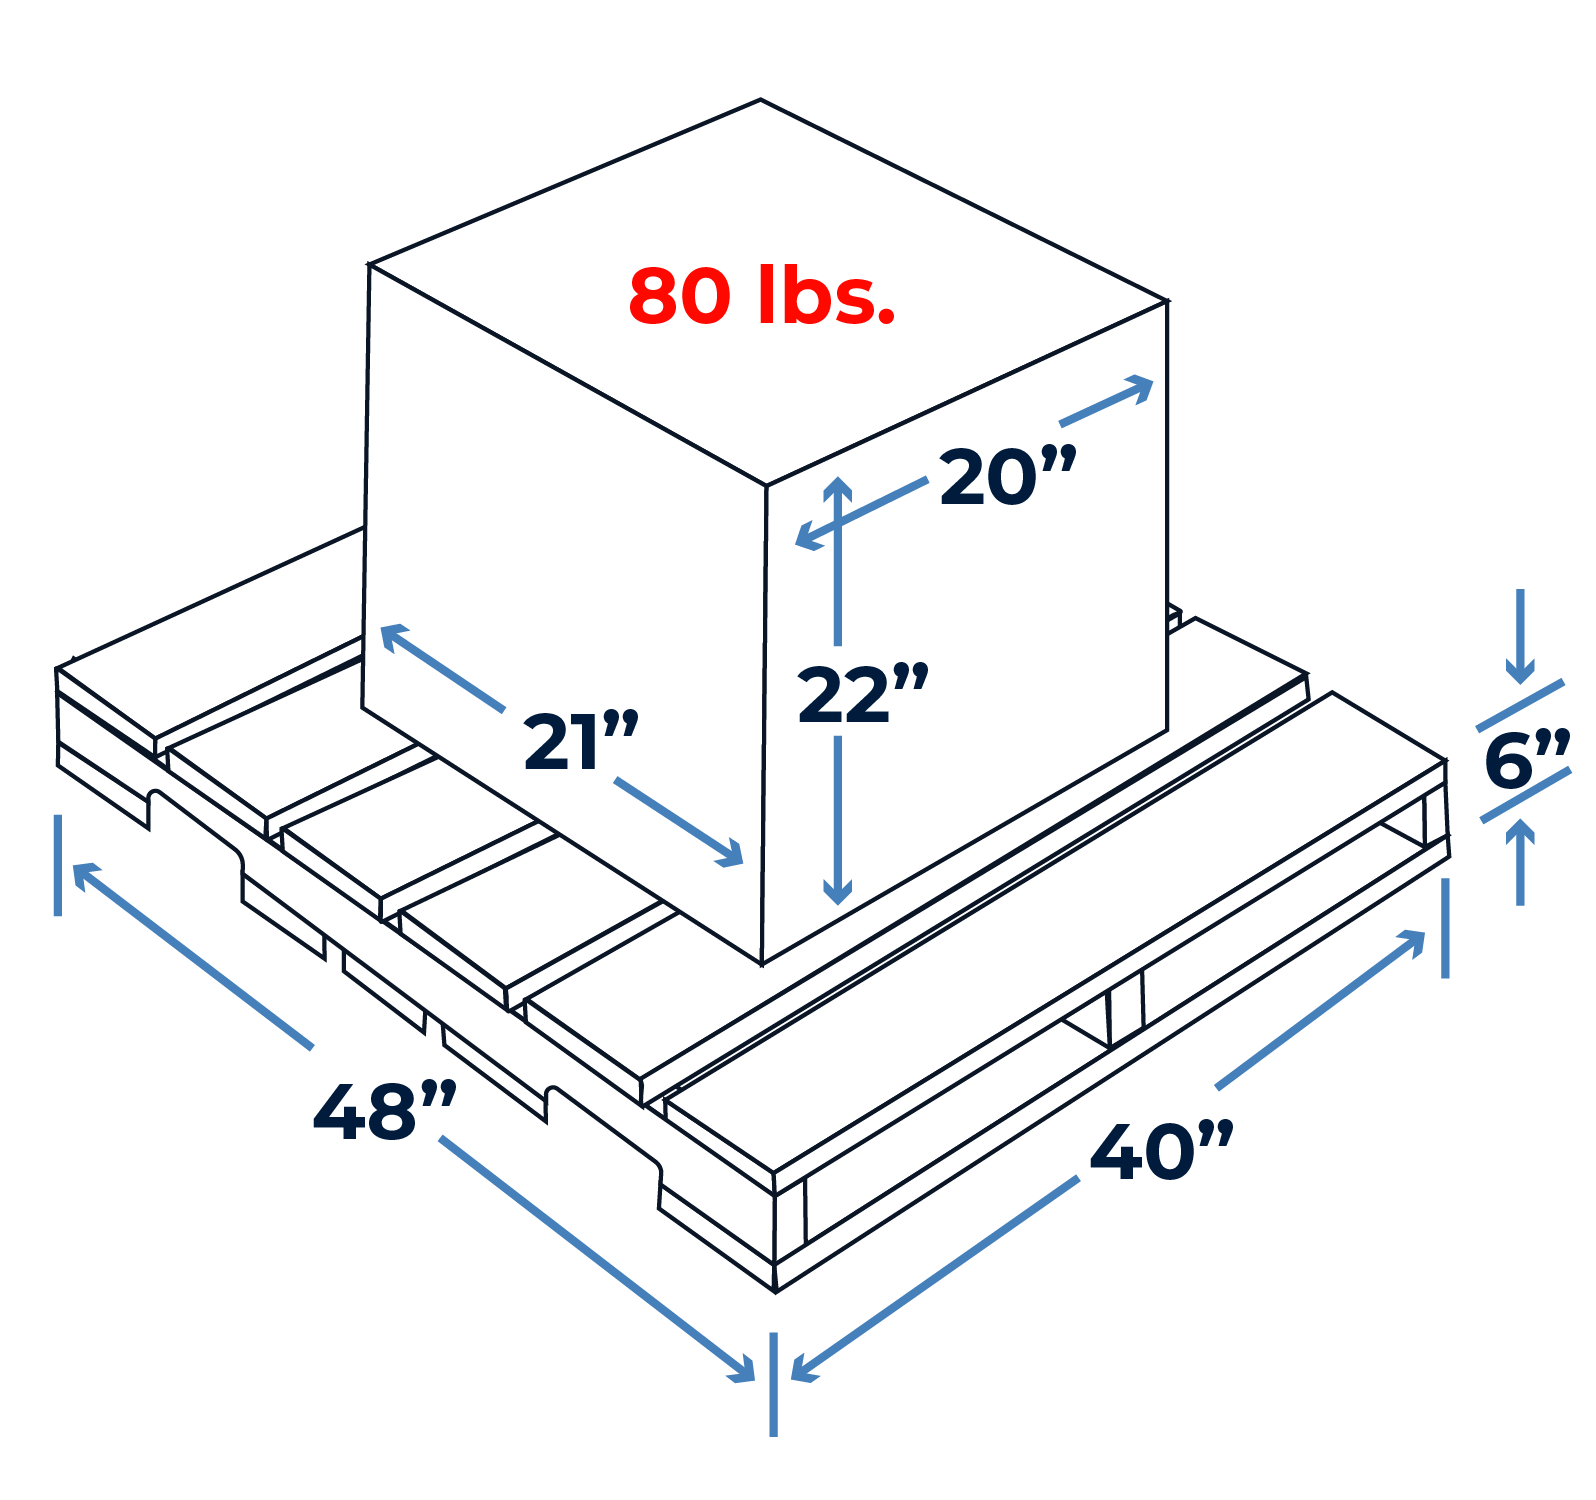 Freight Density Calculator